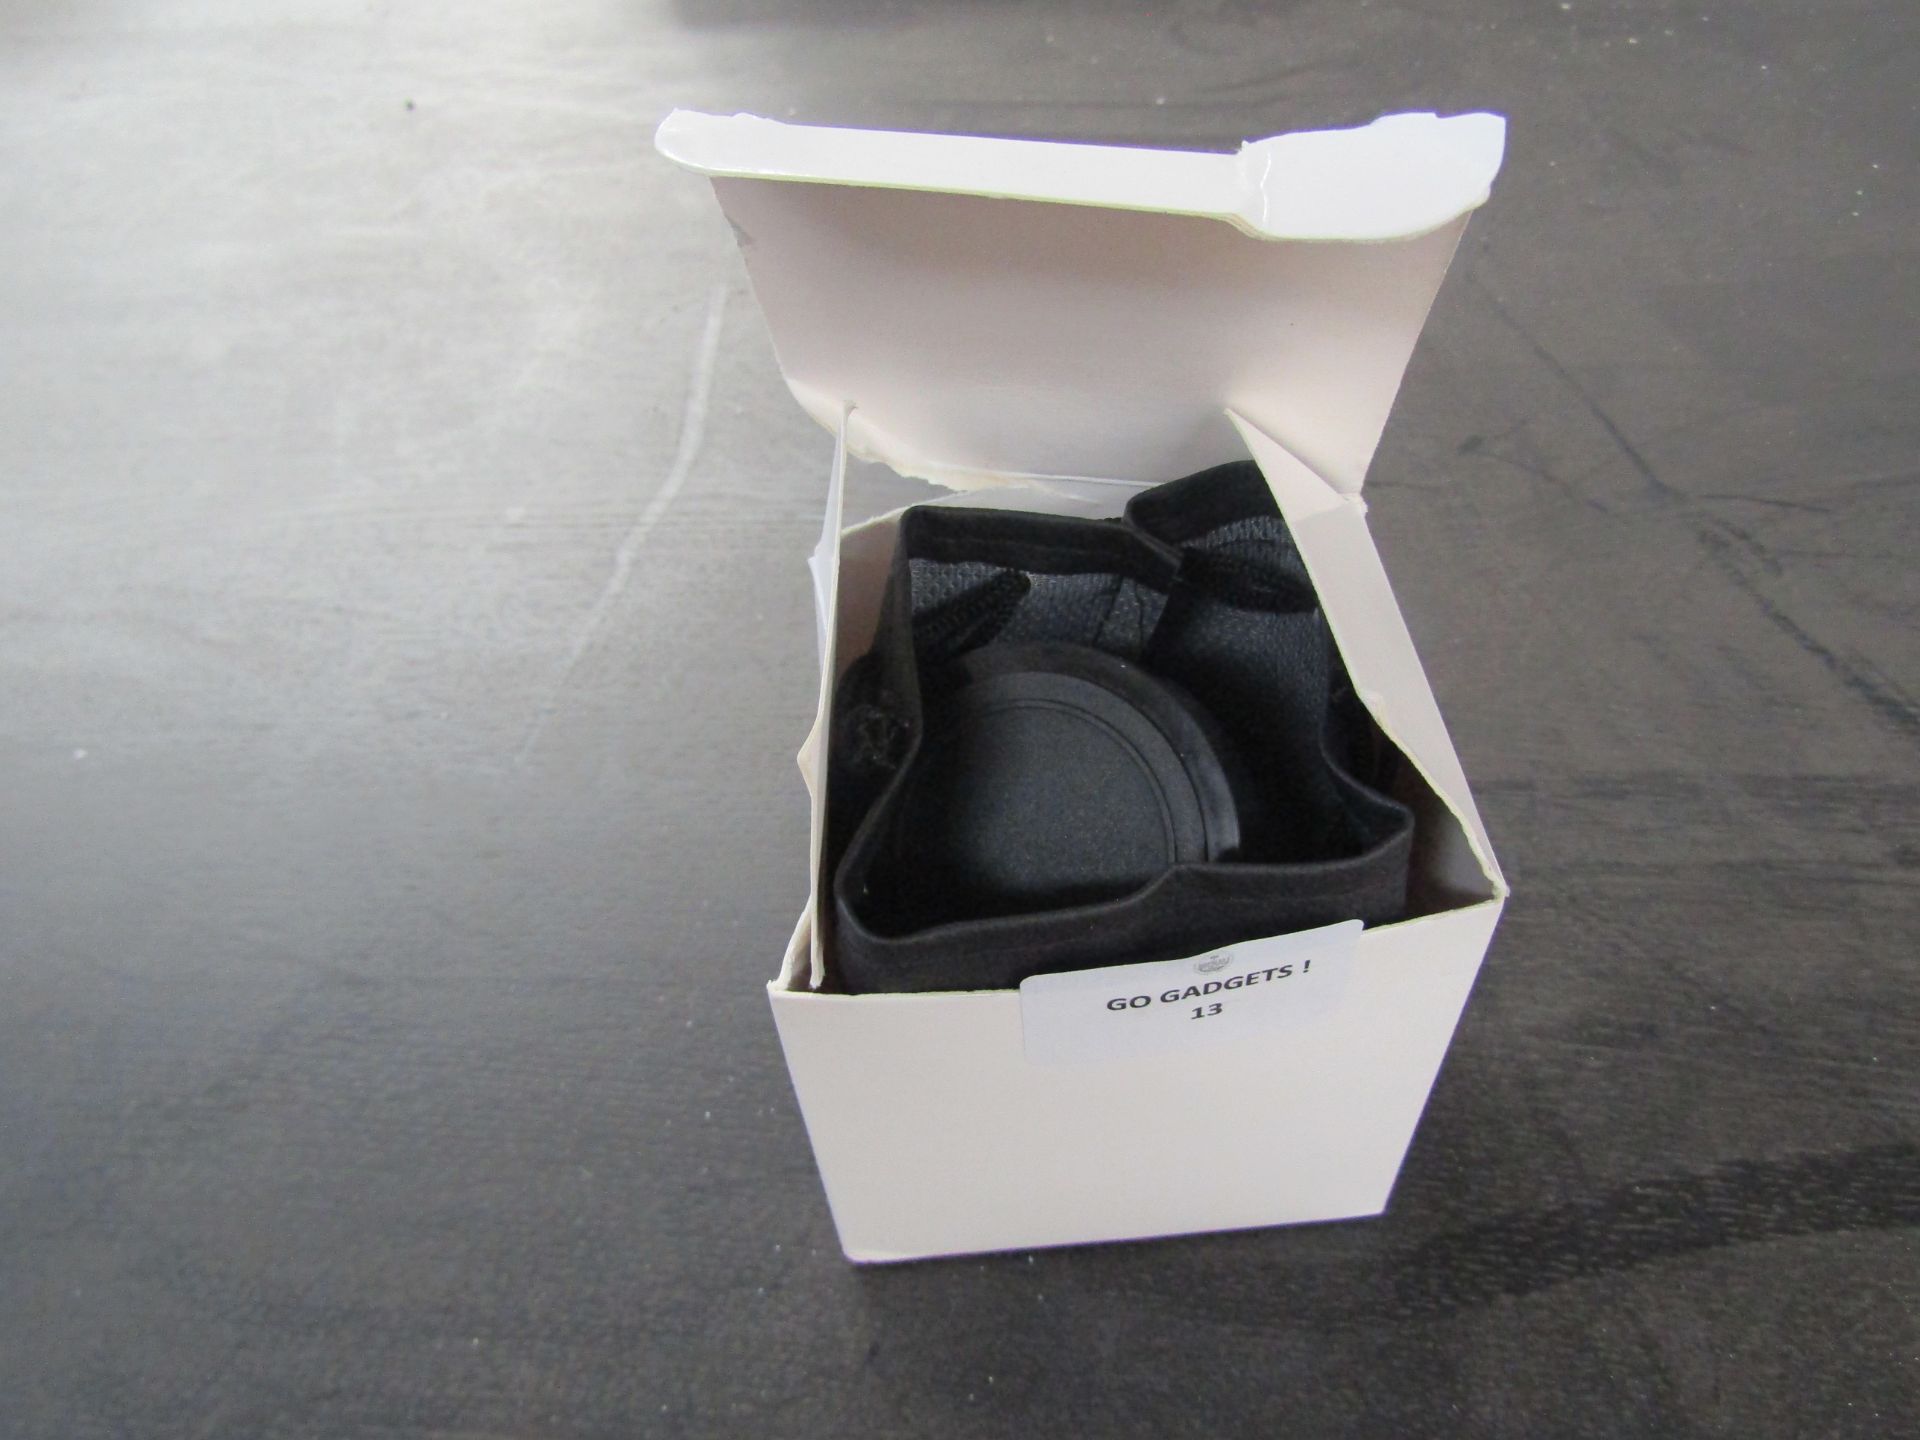 JINTU 2X Teleconverter Lens 500mm 420-800mm 650-1300 900mm - Looks Unused & Boxed - RRP CIRCA £30.